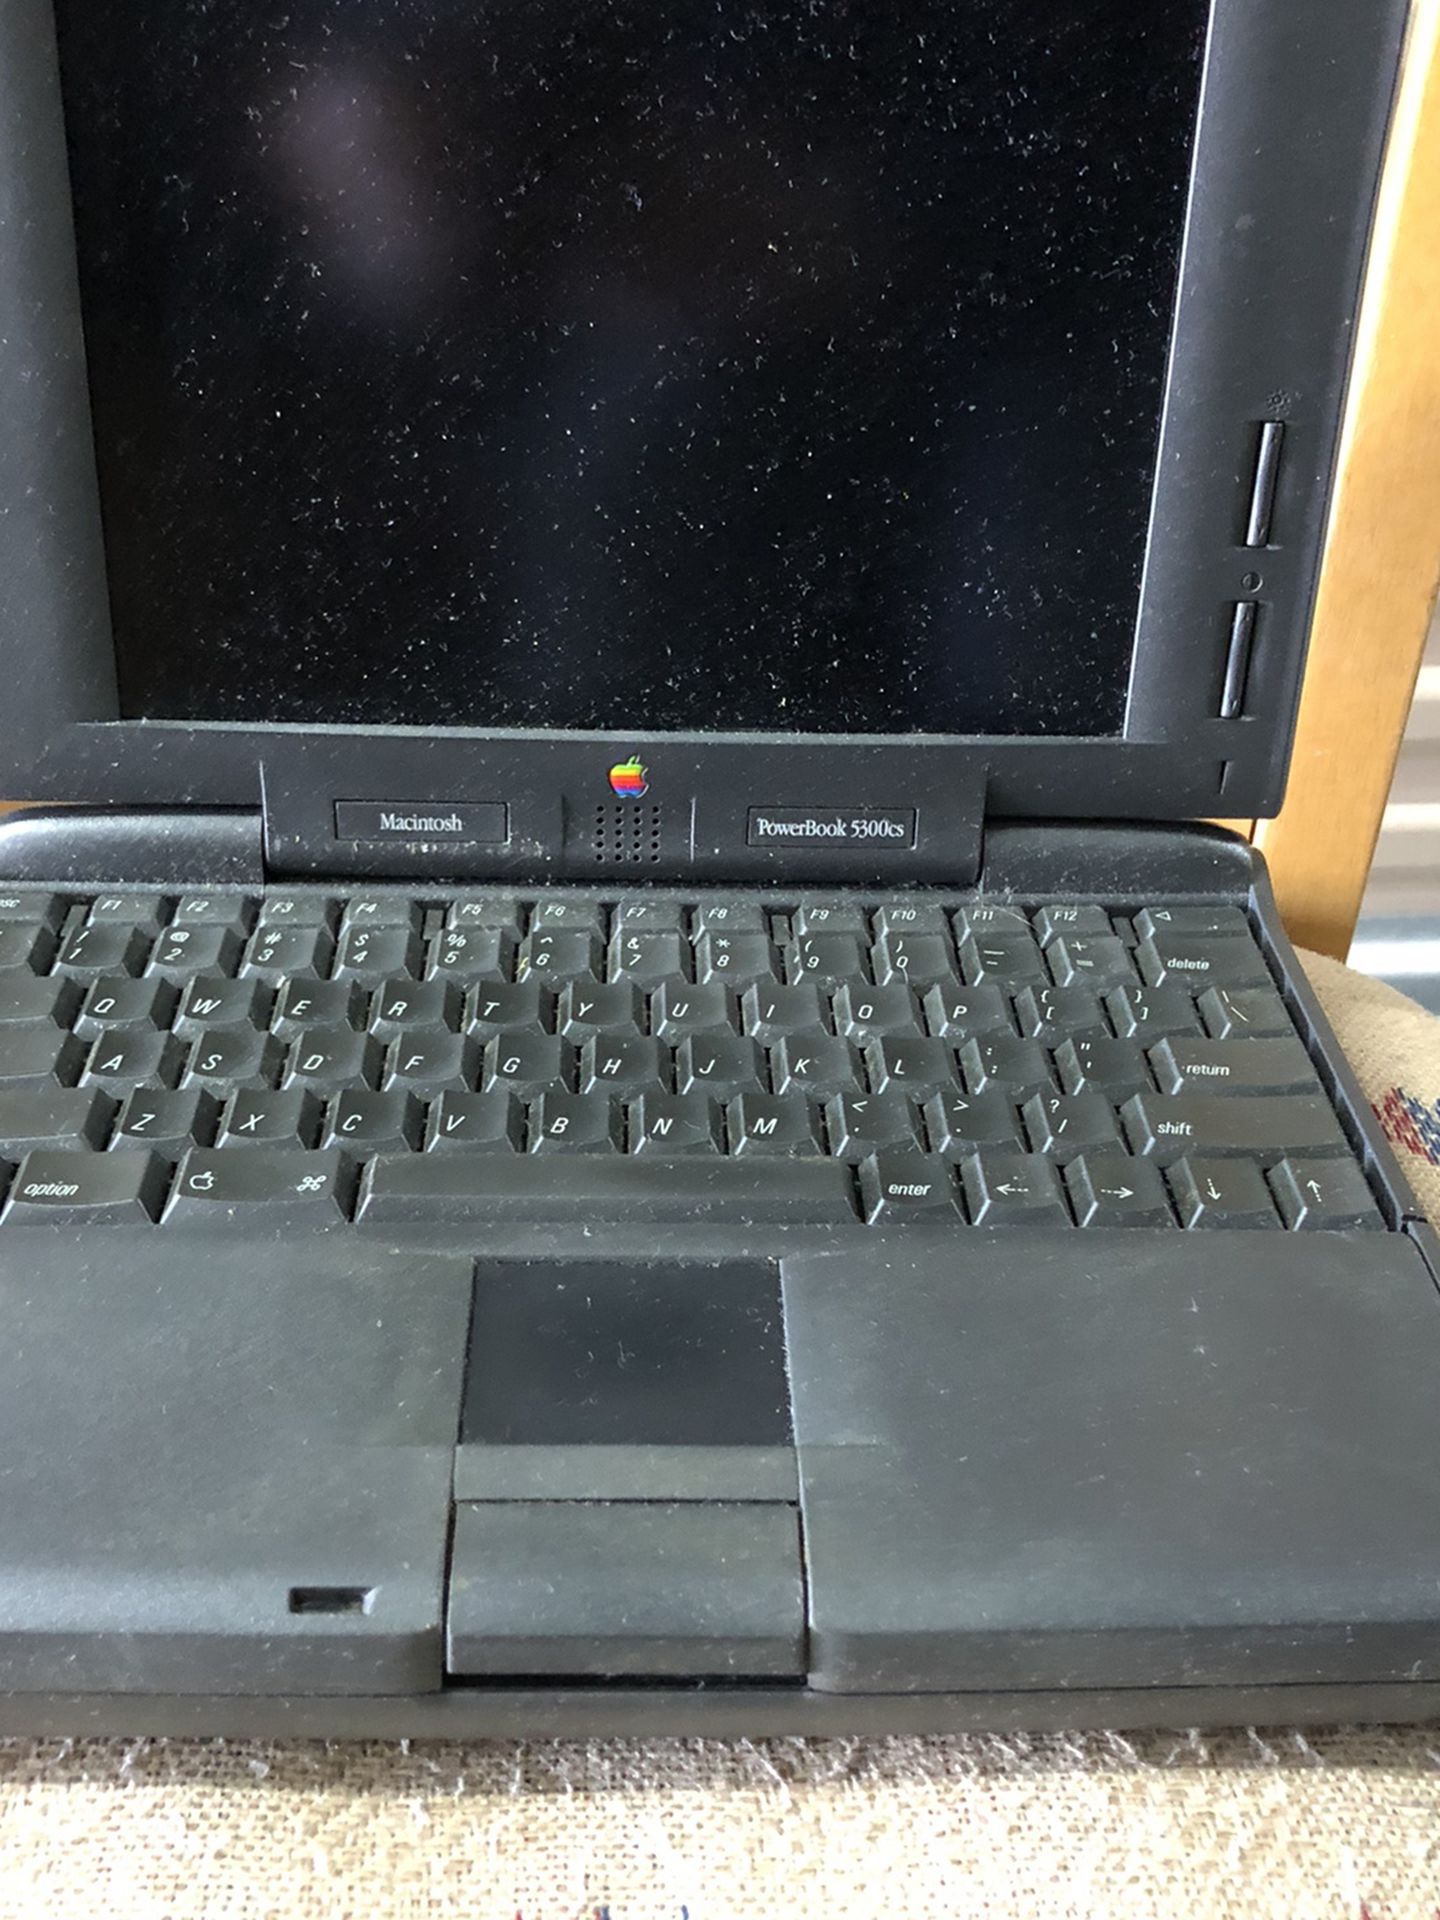 Free (old) Macintosh Laptop With Portable HP Printer